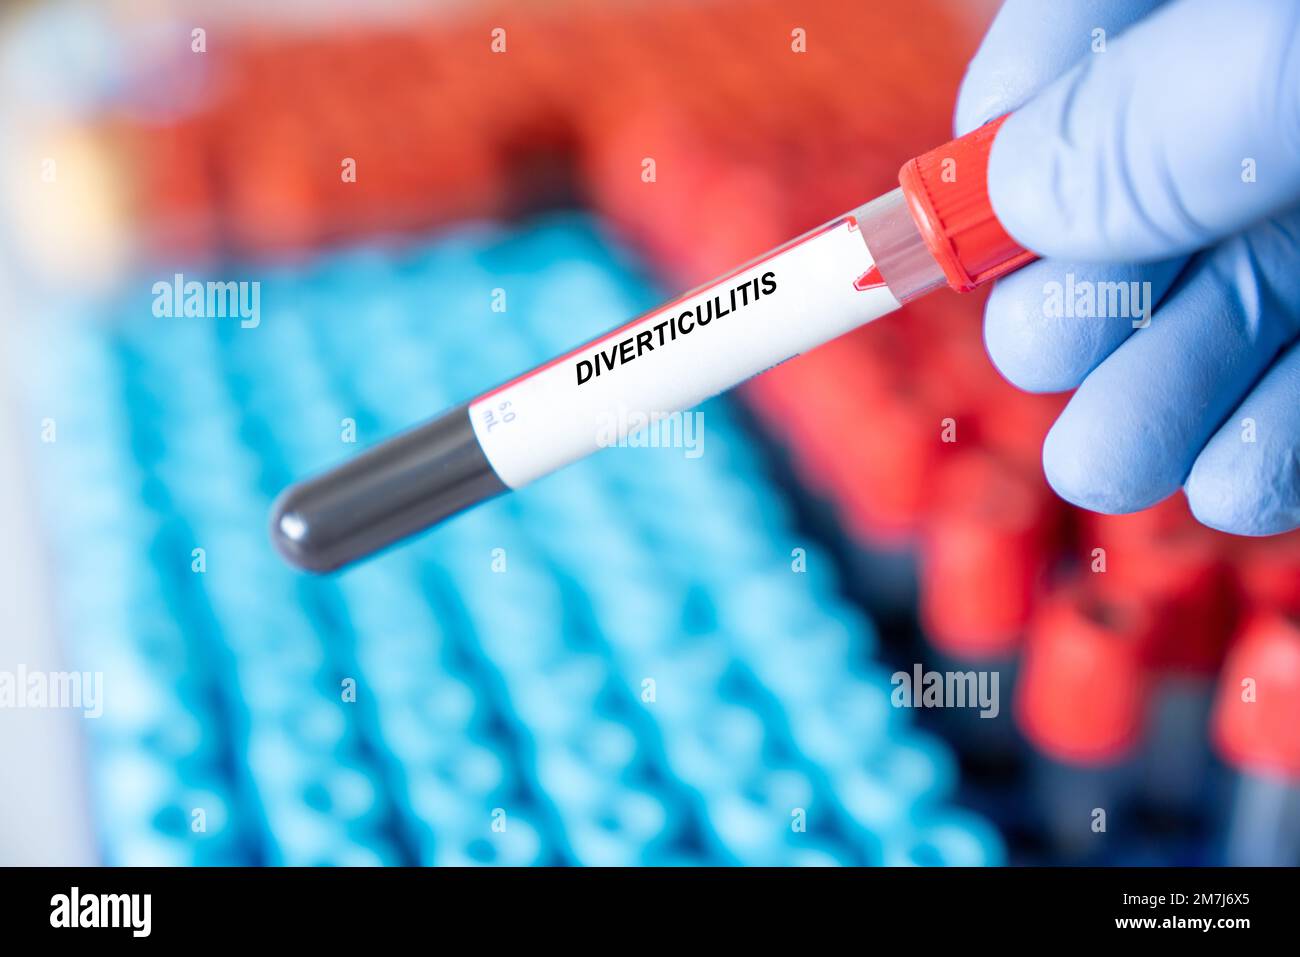 Diverticulitis. Diverticulitis disease blood test inmedical laboratory Stock Photo